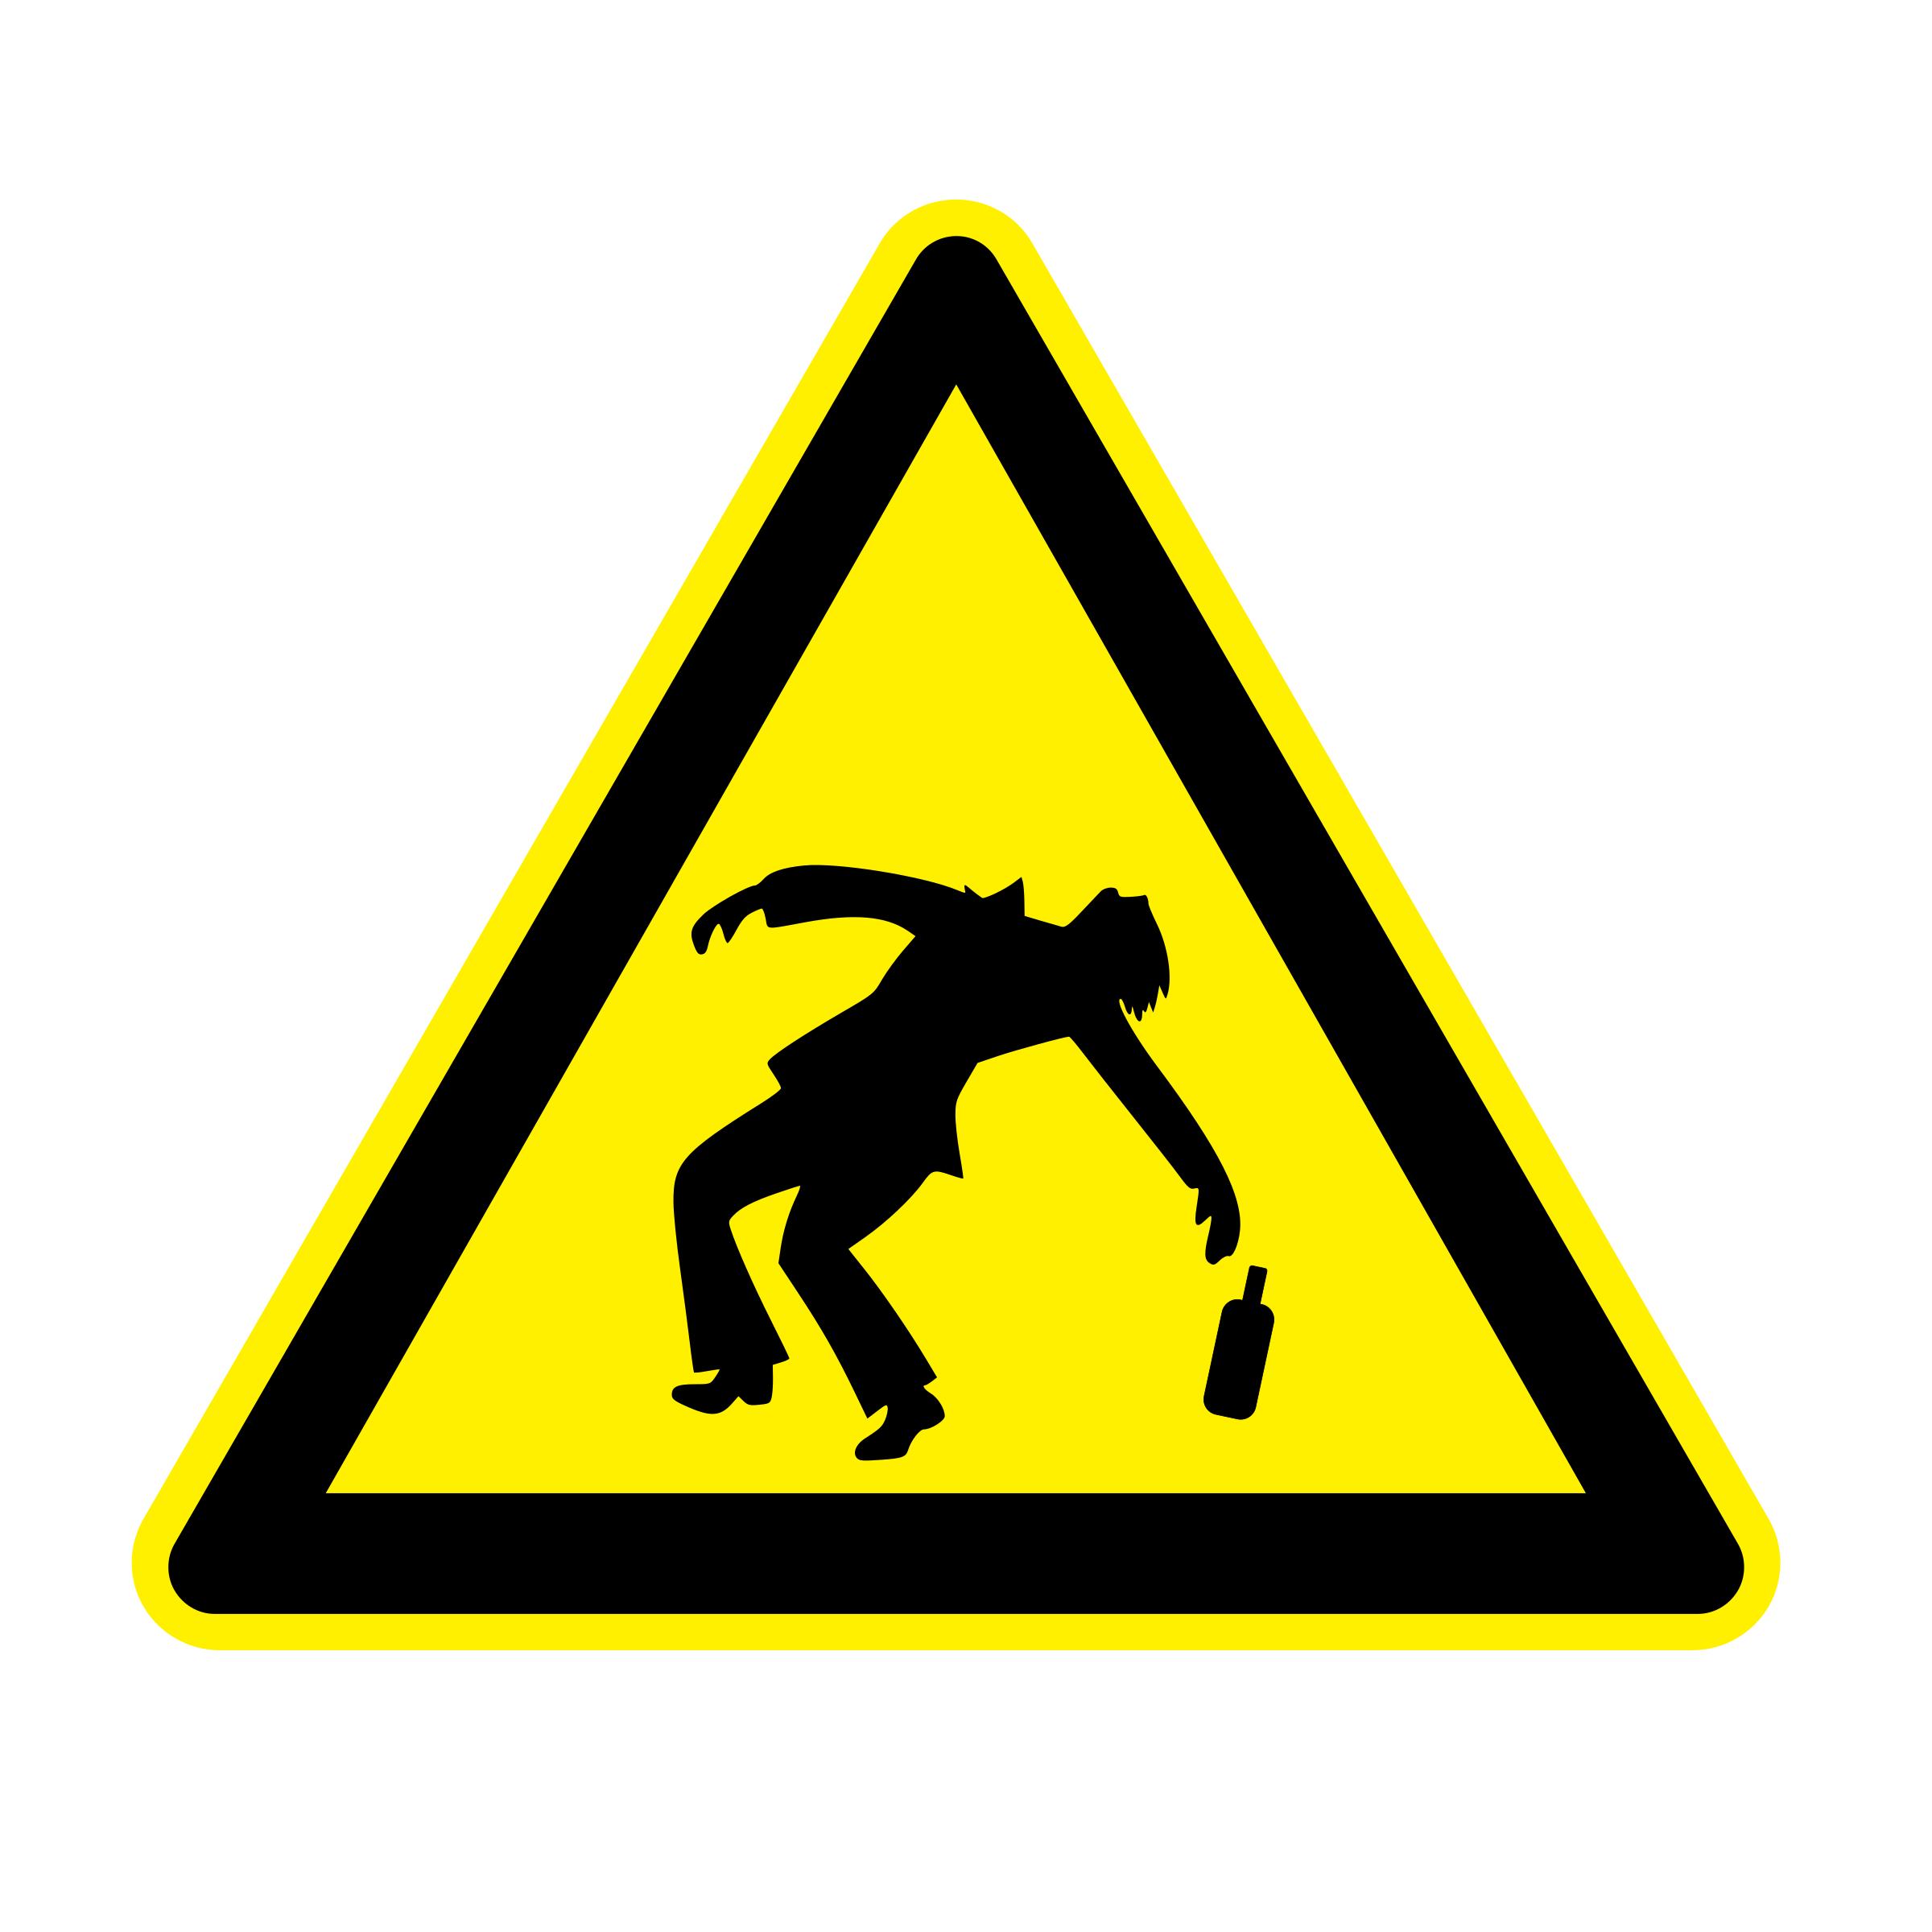 Drunken people warning sign icons